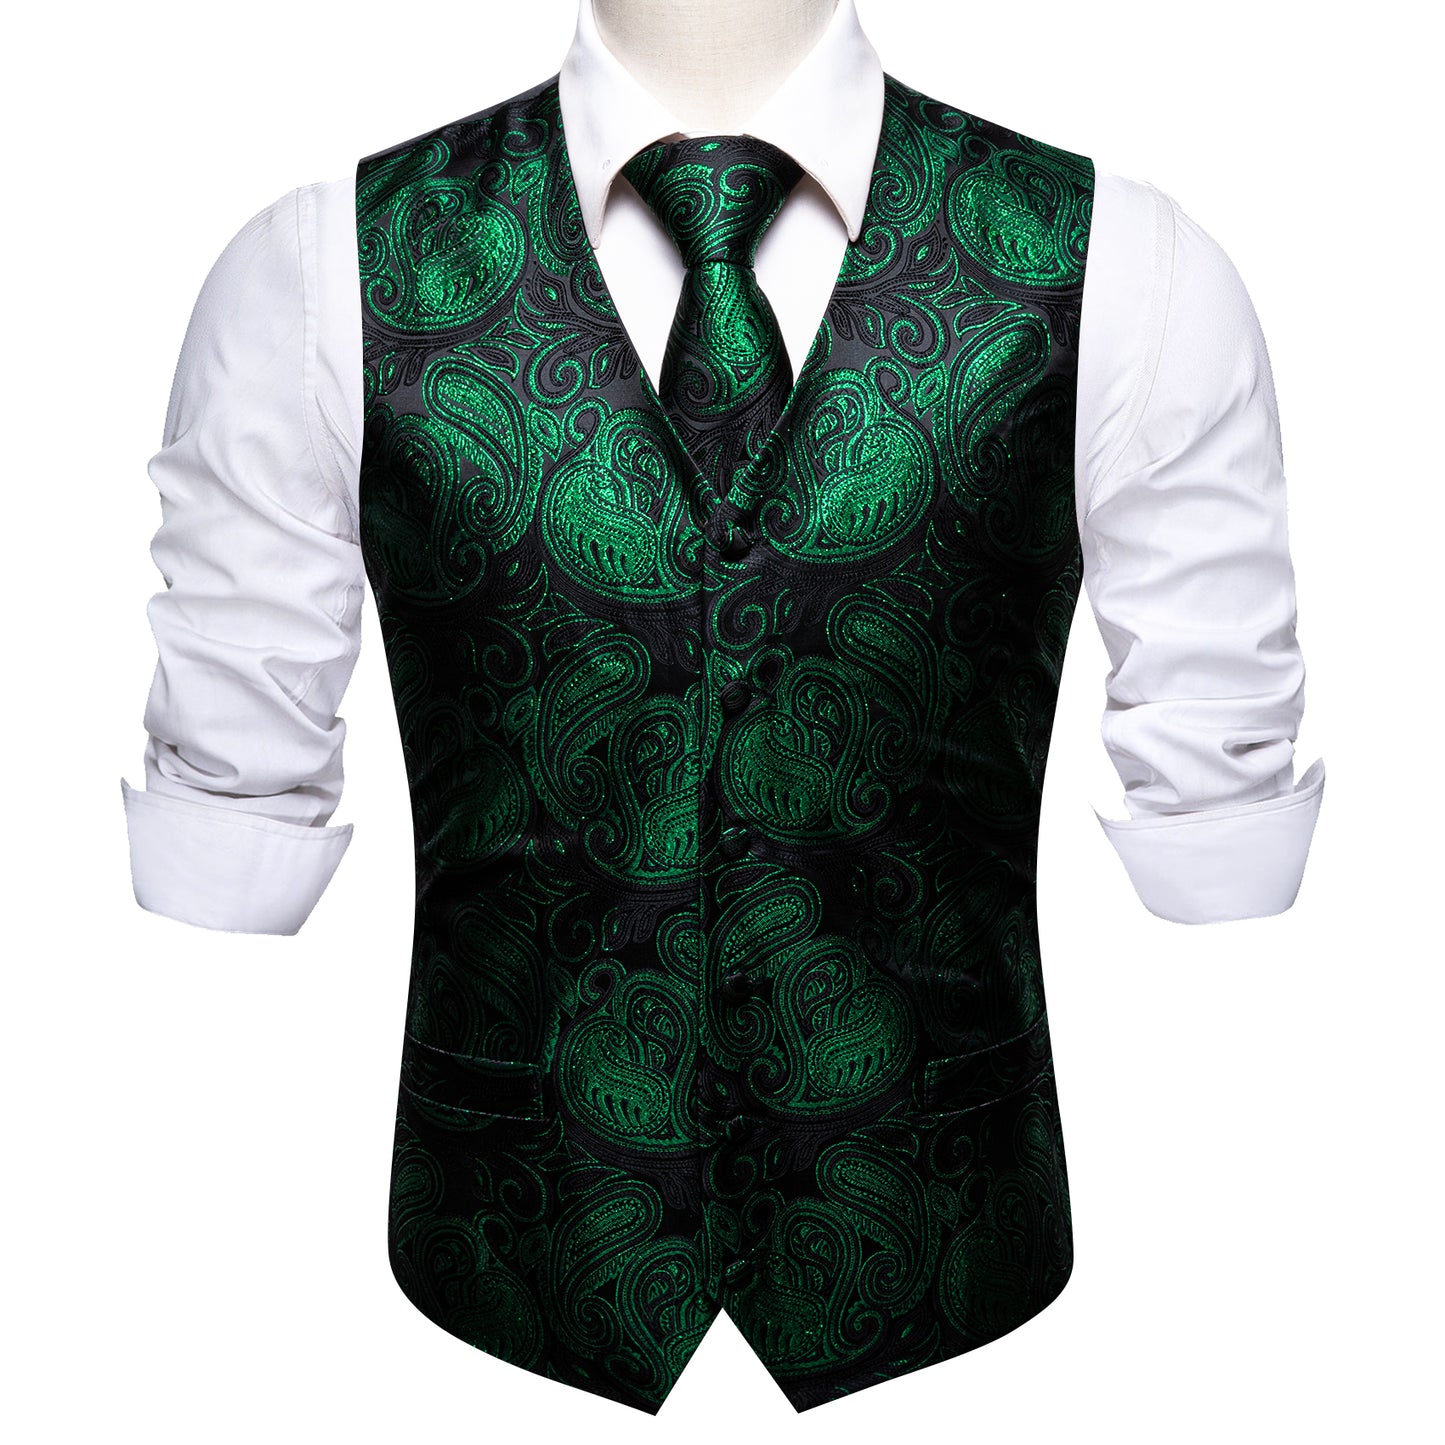 Designer Paisley Waistcoat Silky Novelty Vest Heart Forest Green